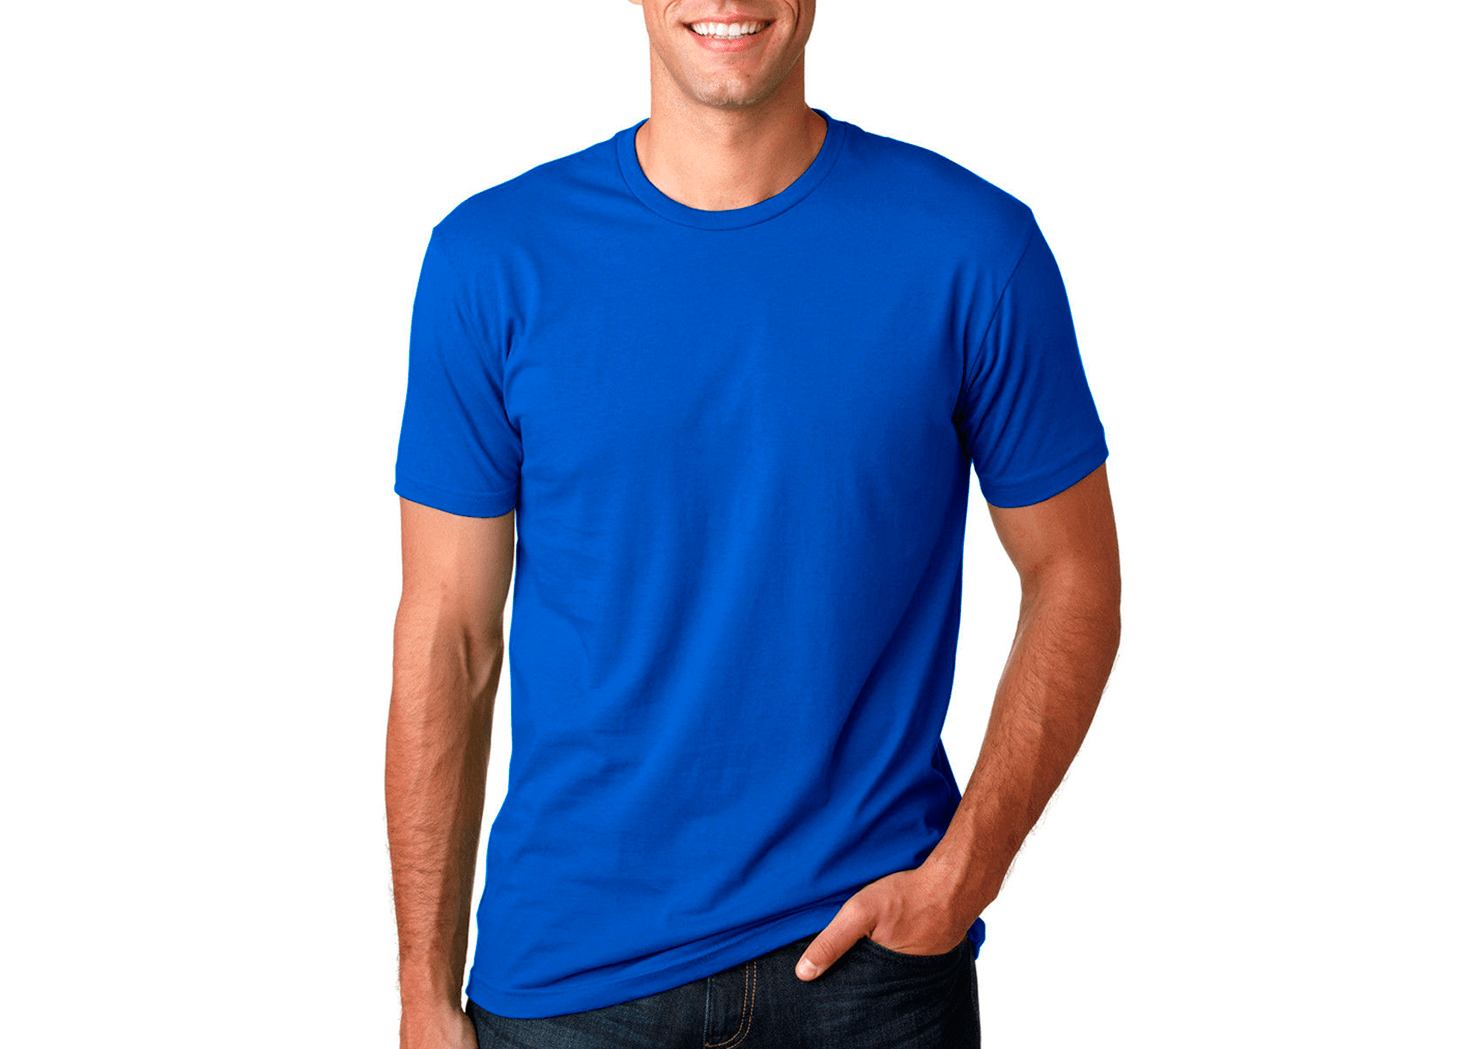 royal blue t shirt for men